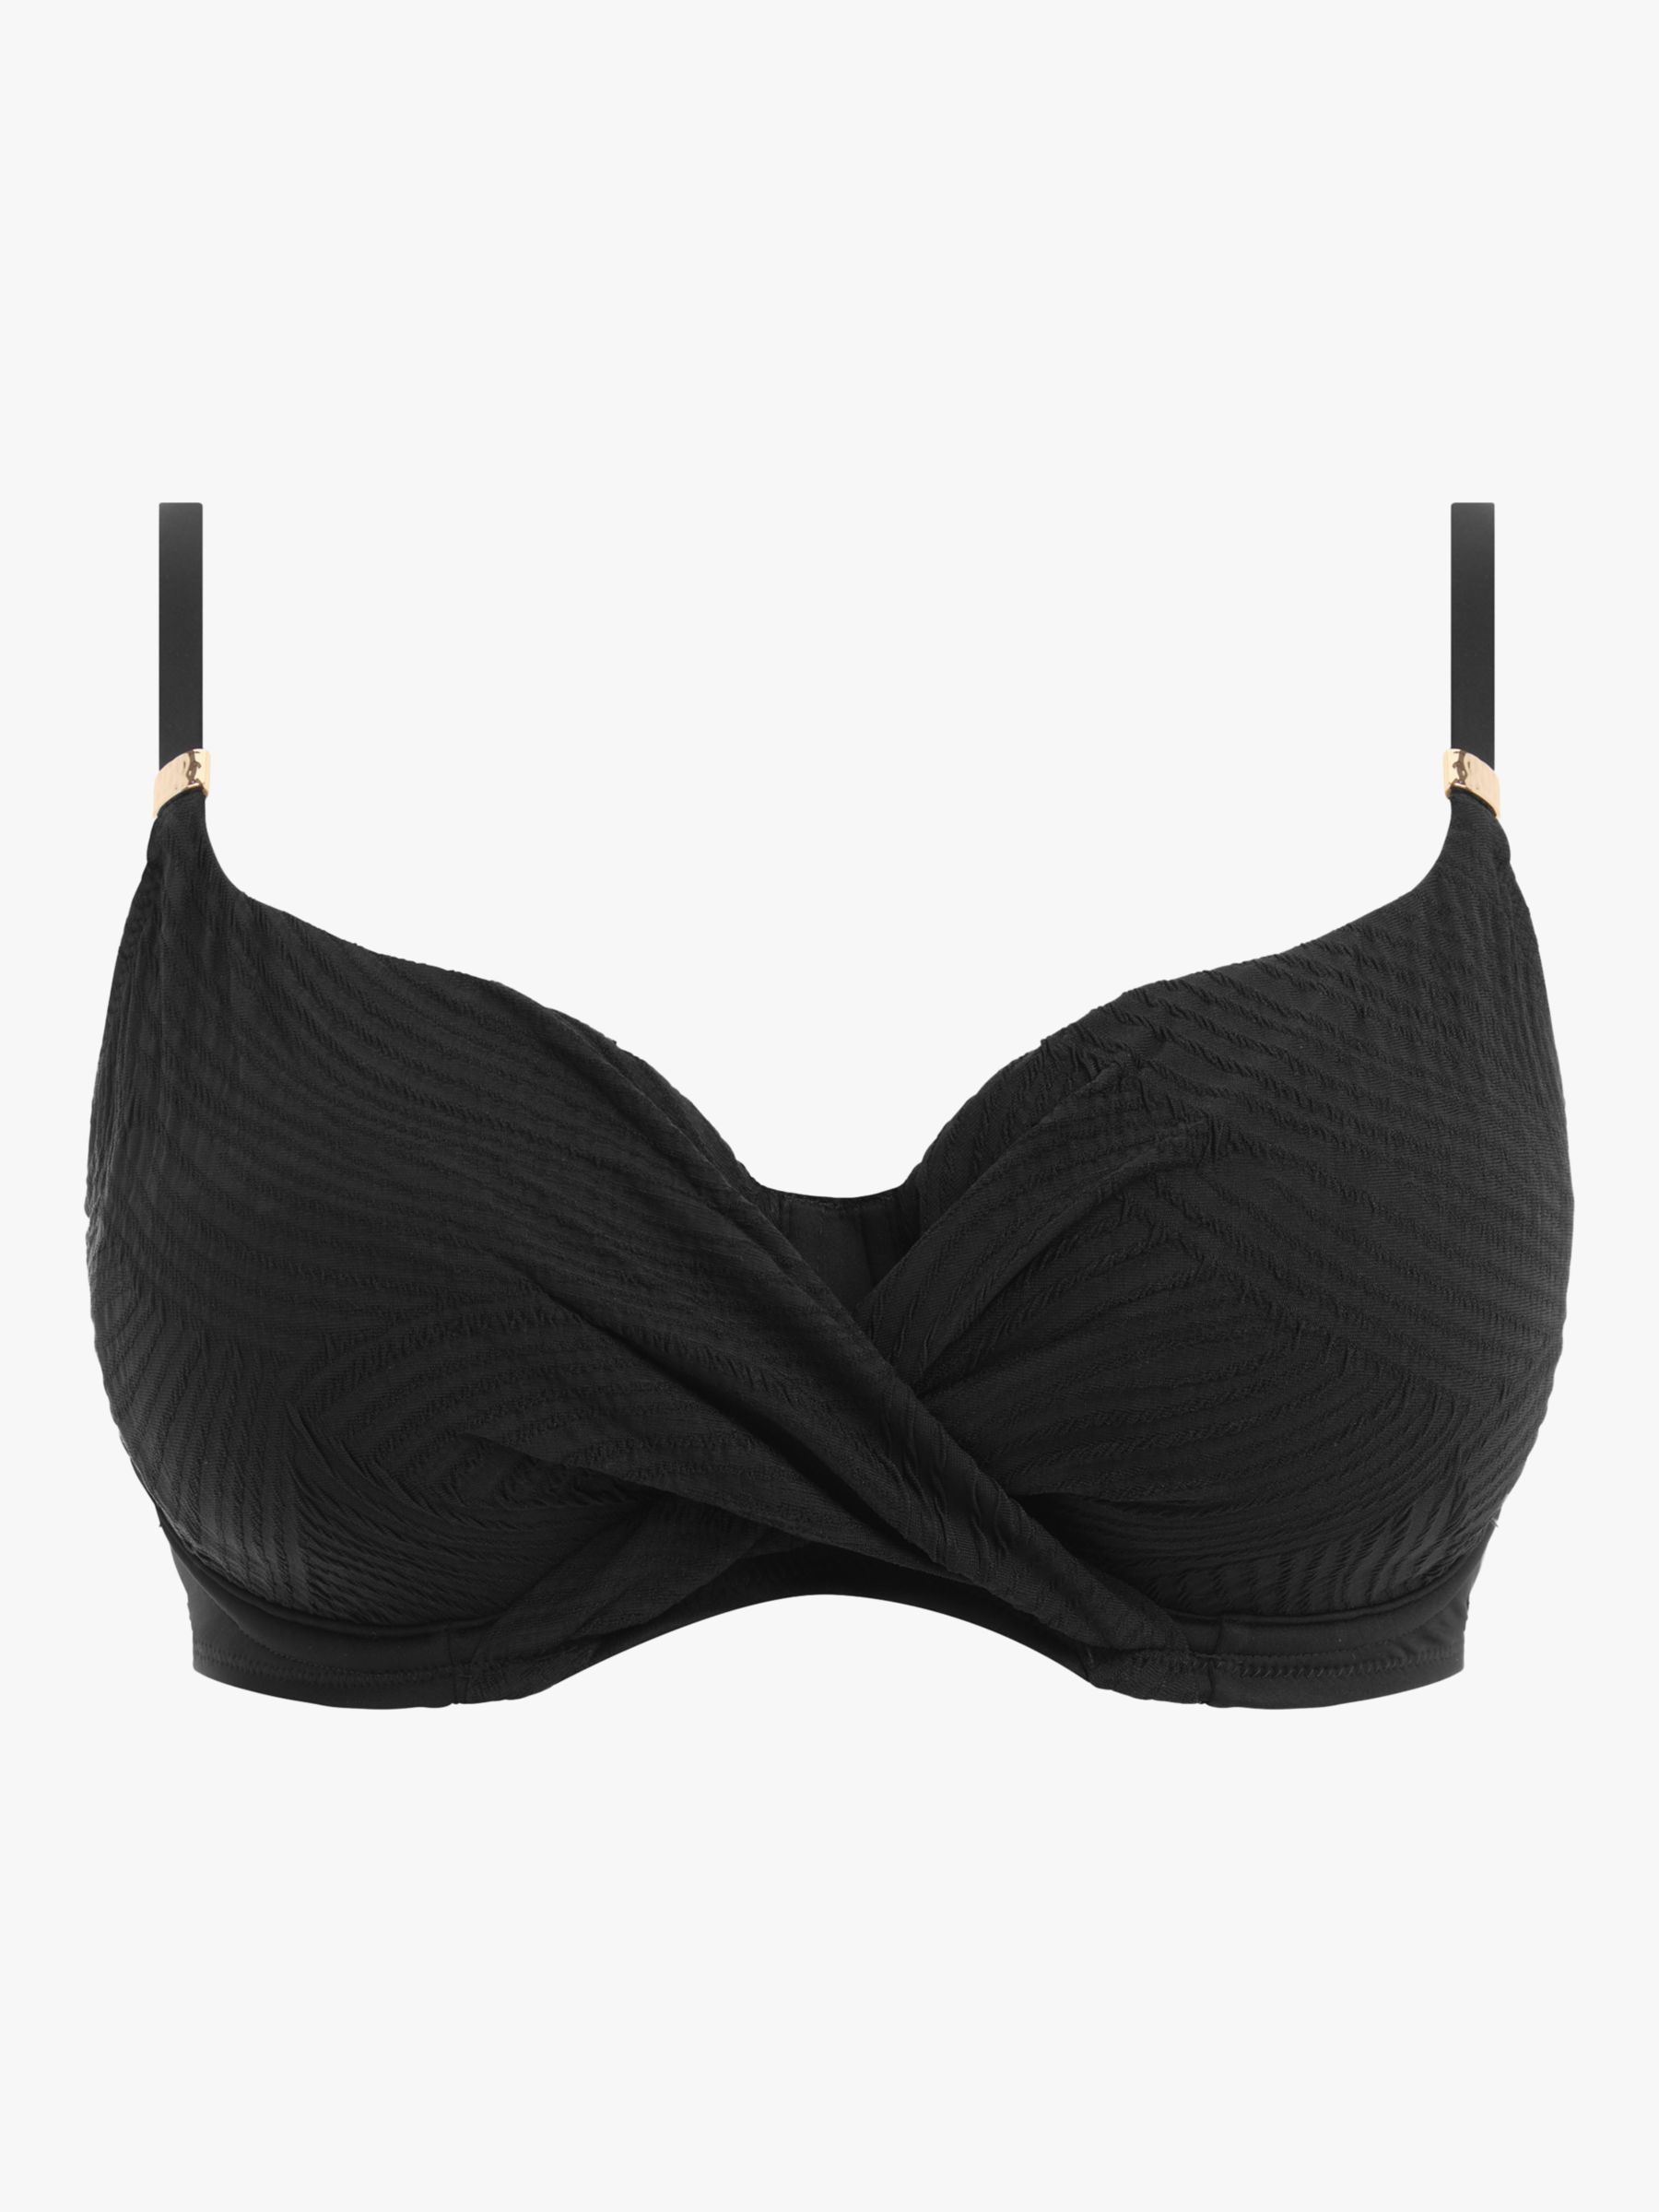 Fantasie Ottawa Bikini Top, Black, 32DD